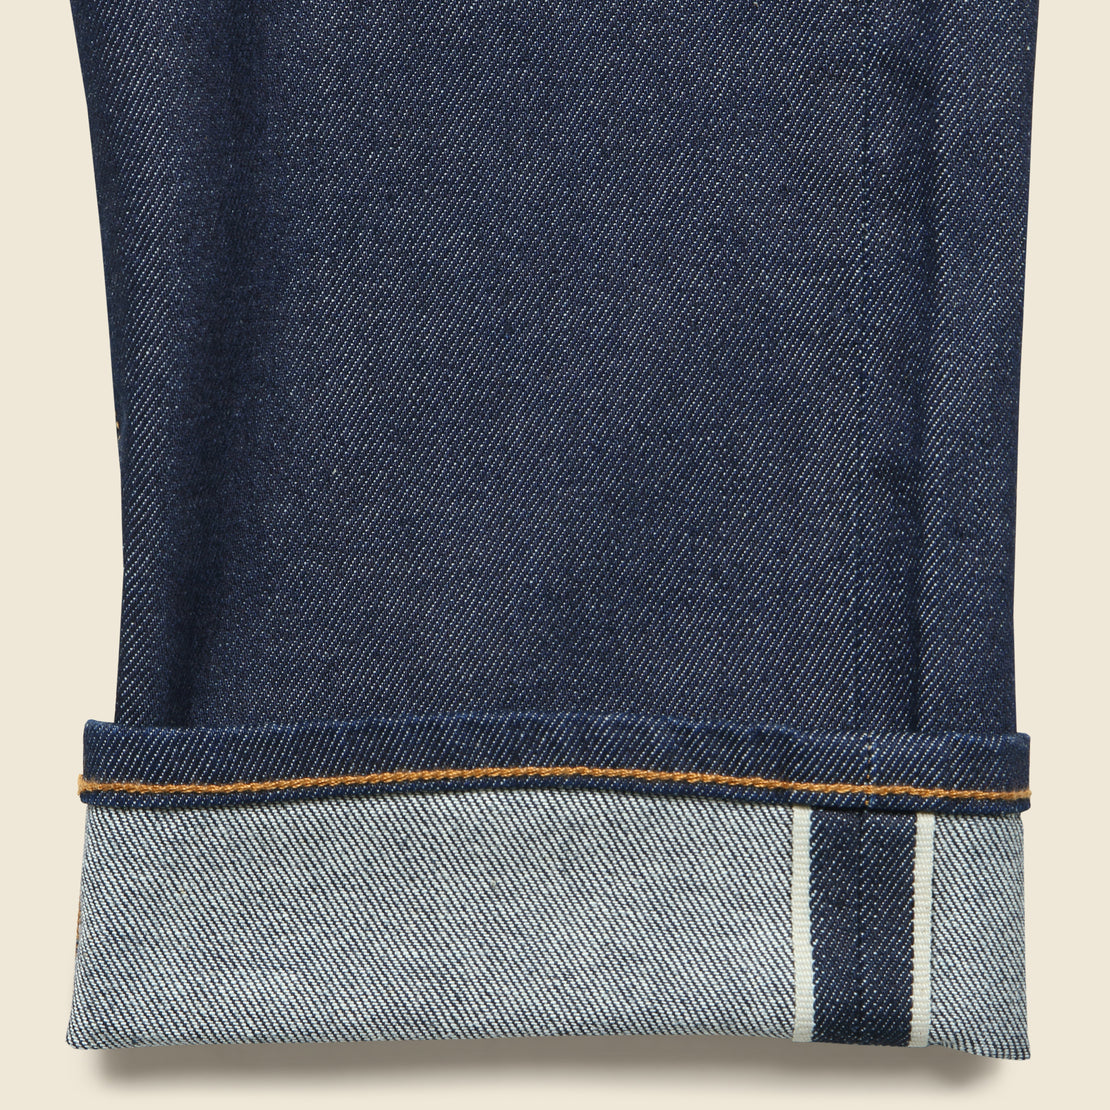 511 Slim Fit Jean - Dark Rinse - Levi's Made in Japan - STAG Provisions - Pants - Denim